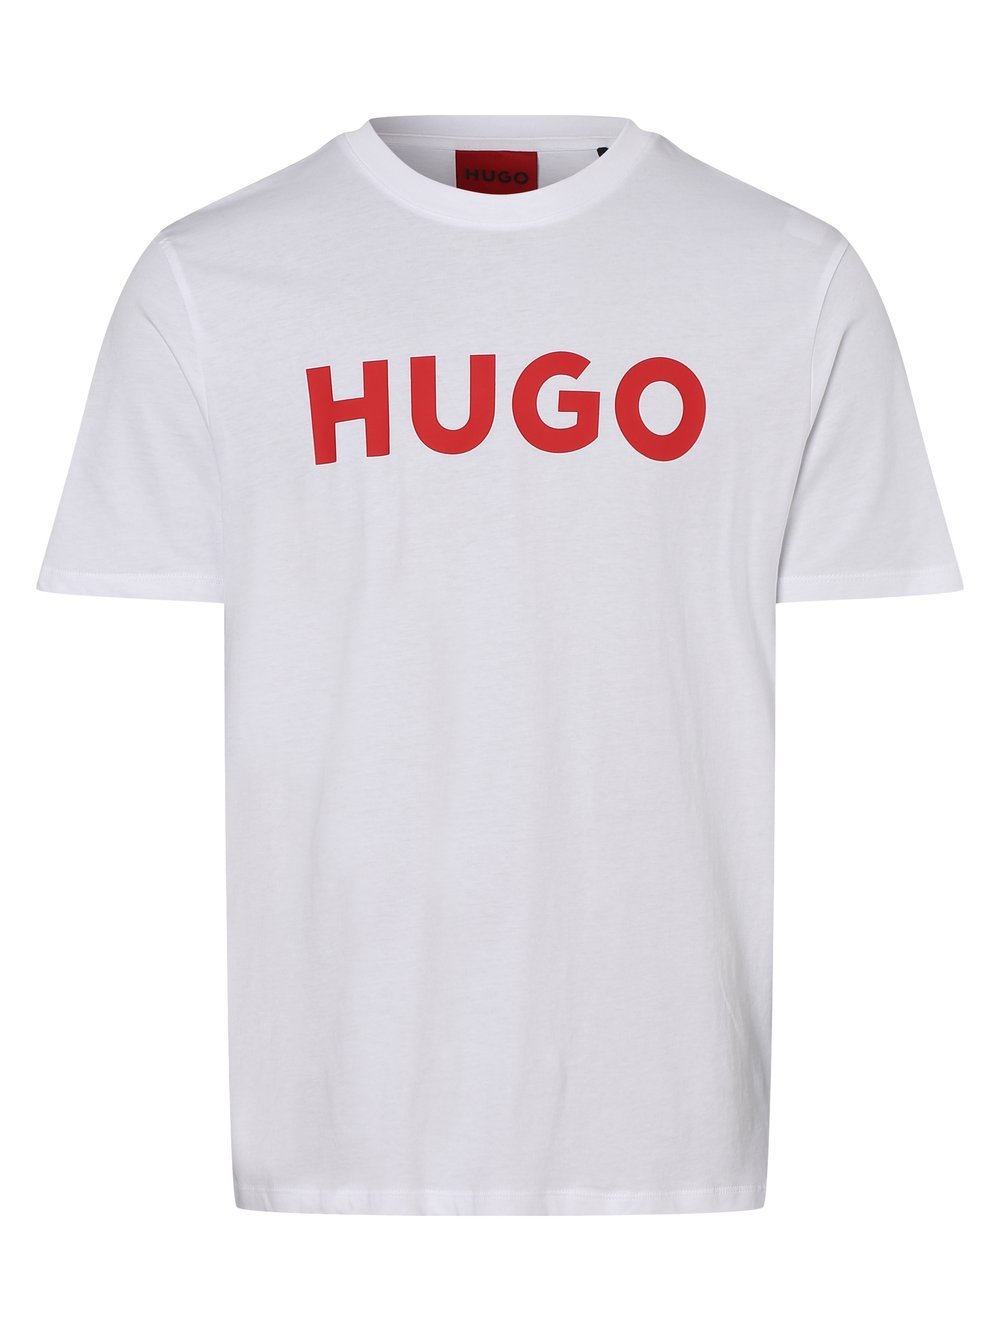 HUGO - T-shirt męski – Dulivio, biały